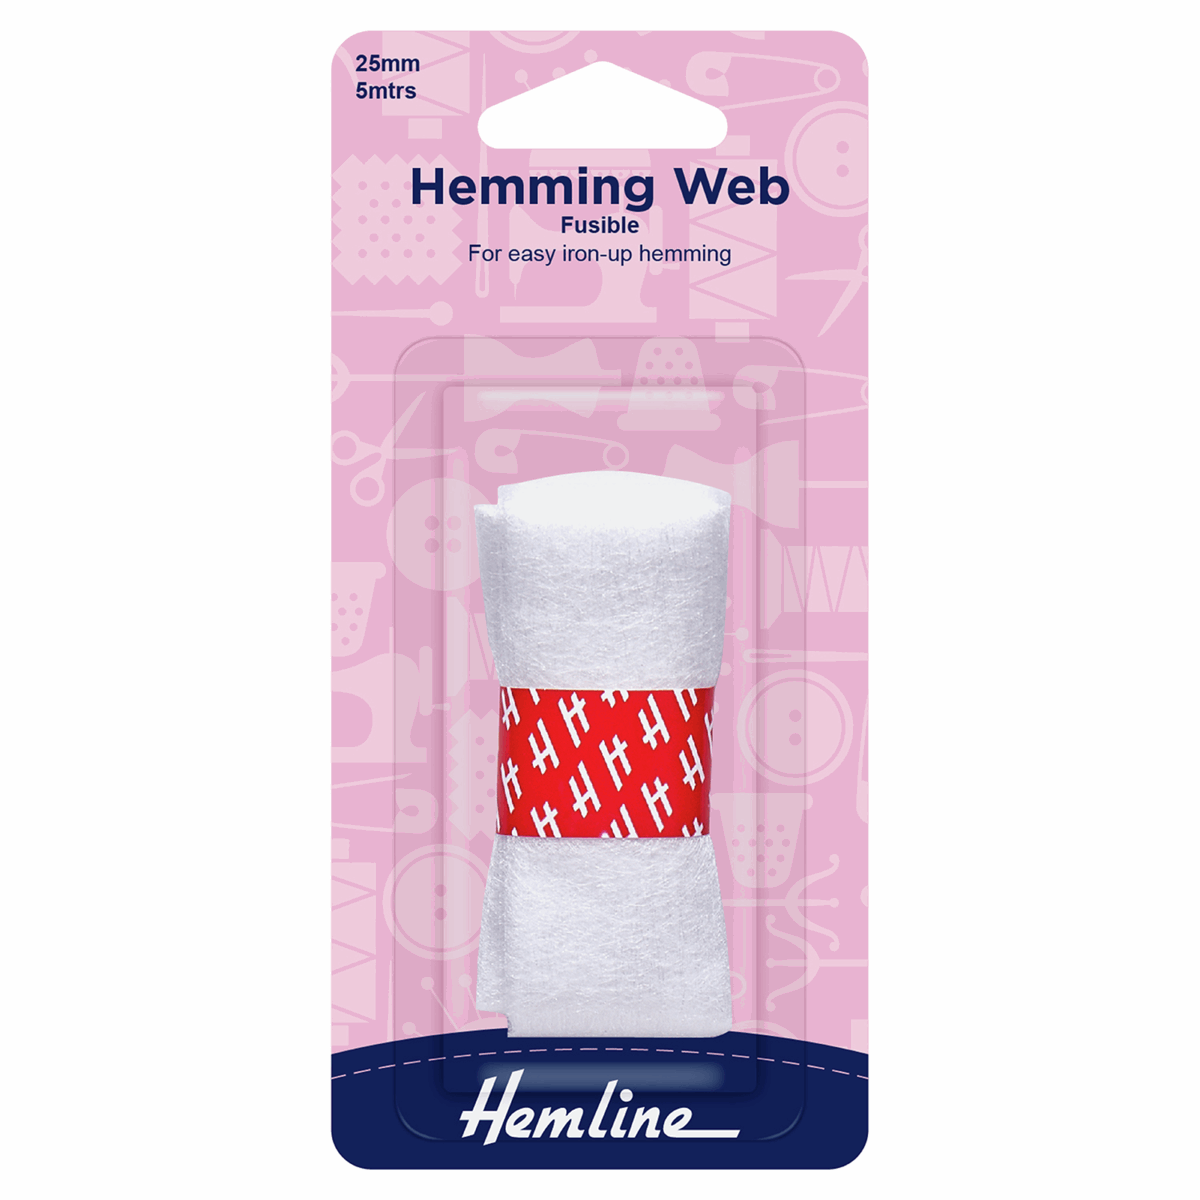 Hemline Standard Fusible Hemming Web Tape: 25mm